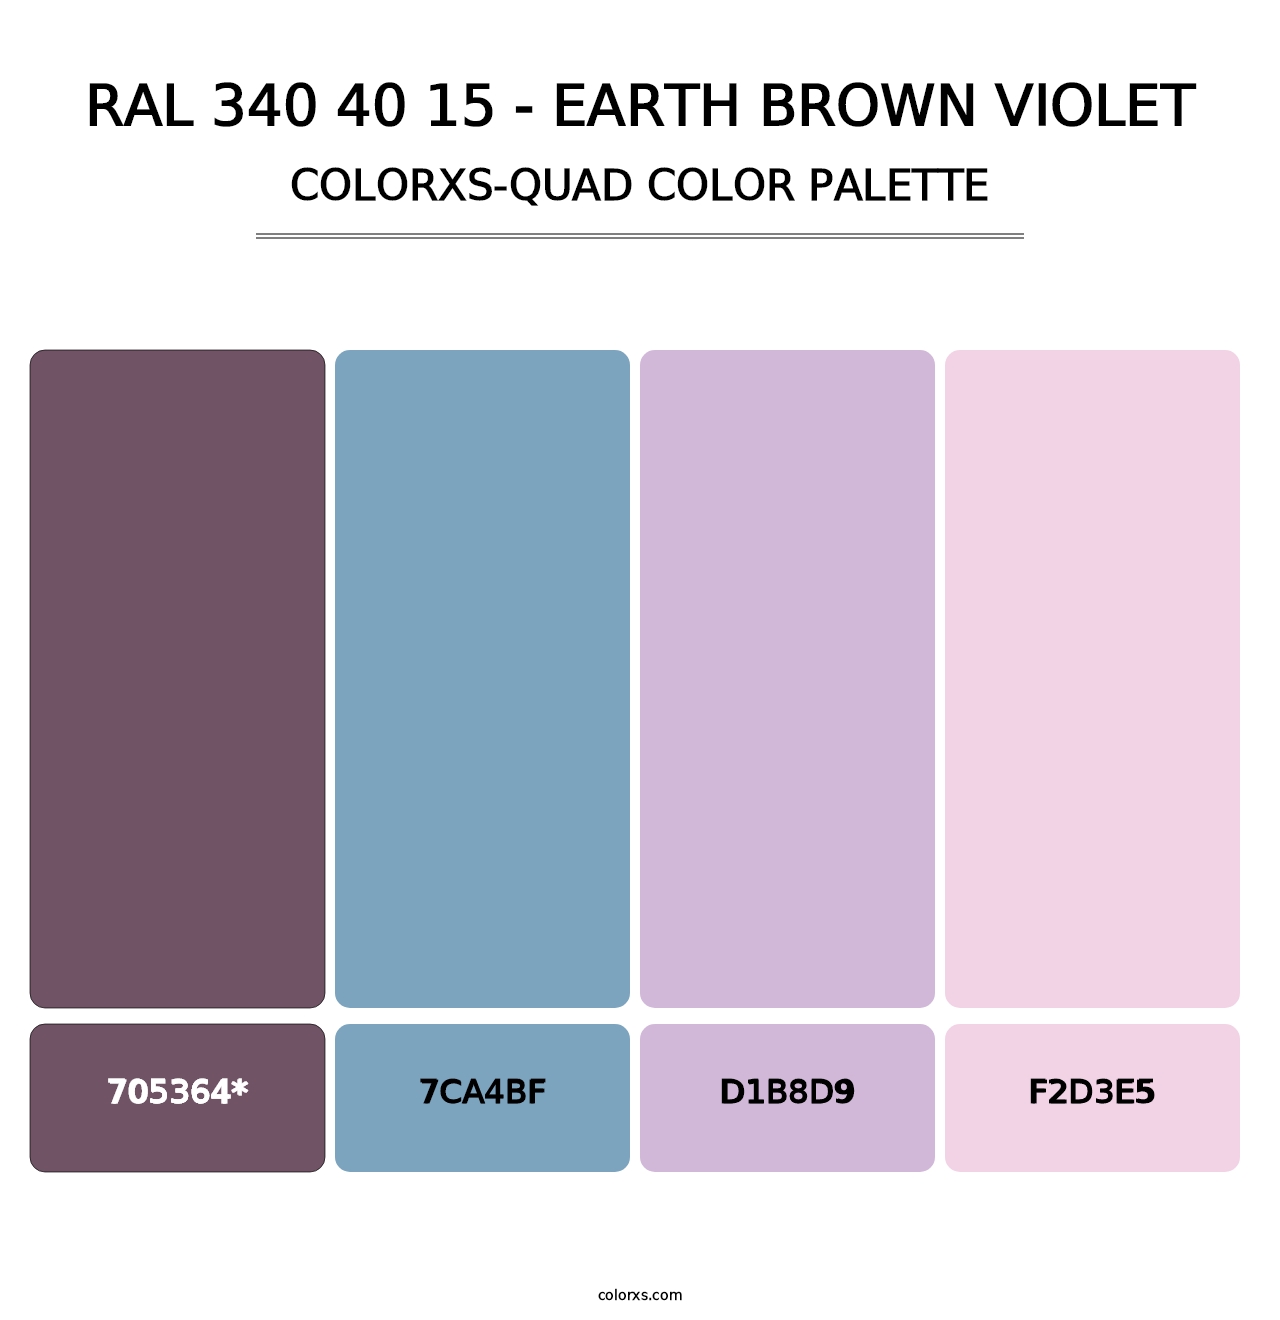 RAL 340 40 15 - Earth Brown Violet - Colorxs Quad Palette